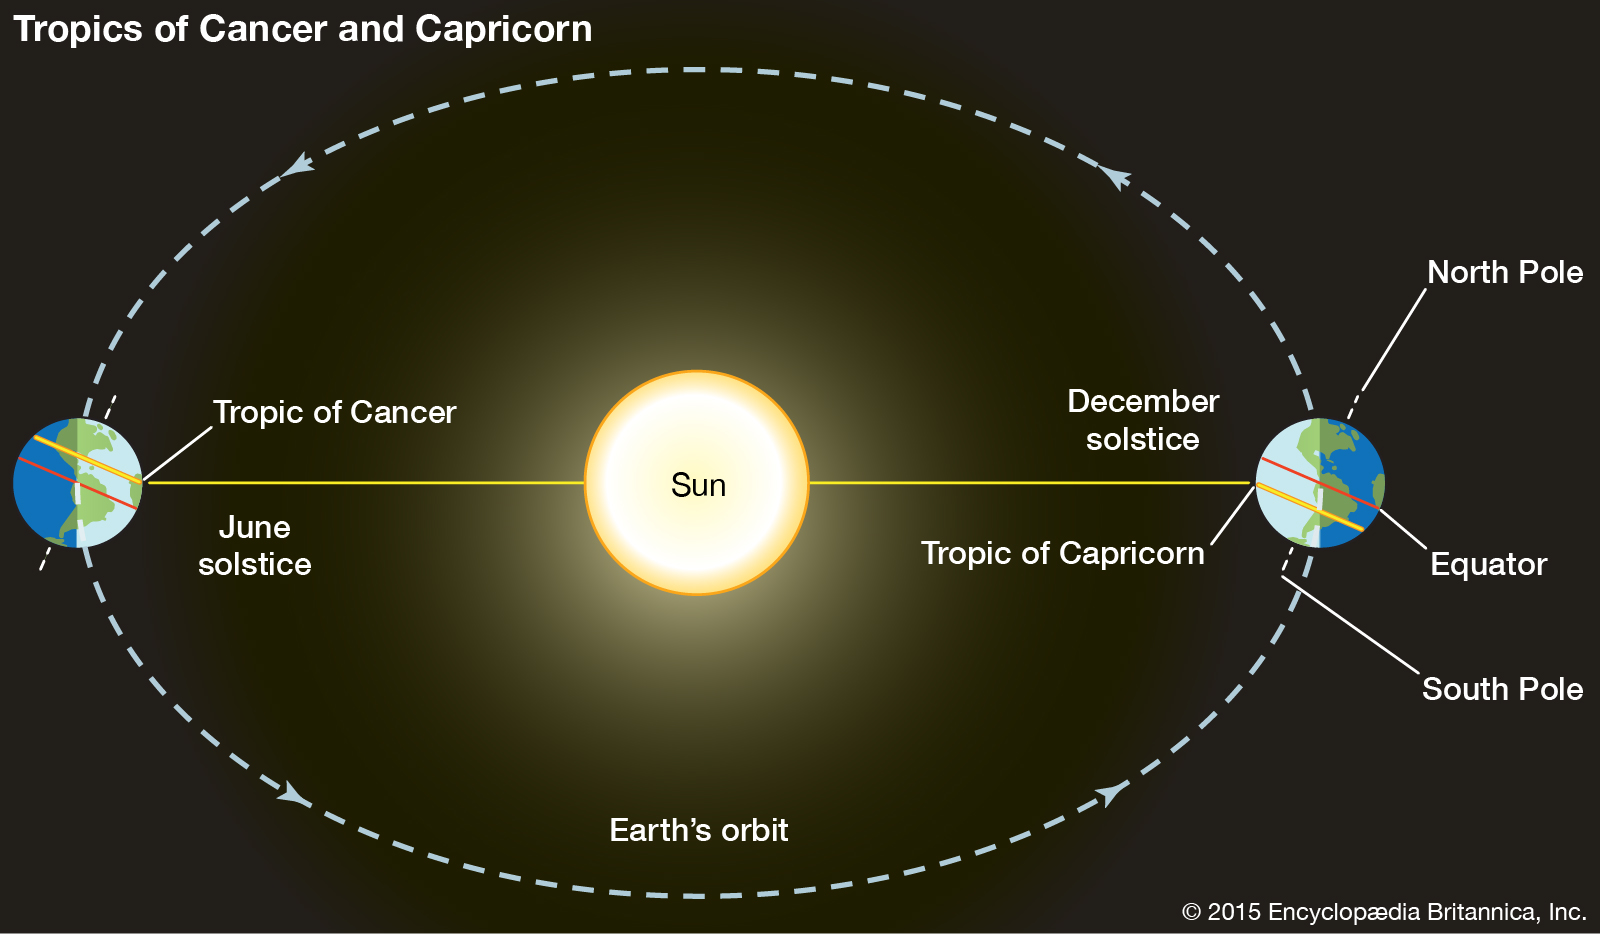 orbit-Earth-Sun-solstices-Tropics-of-Cancer (1).jpg